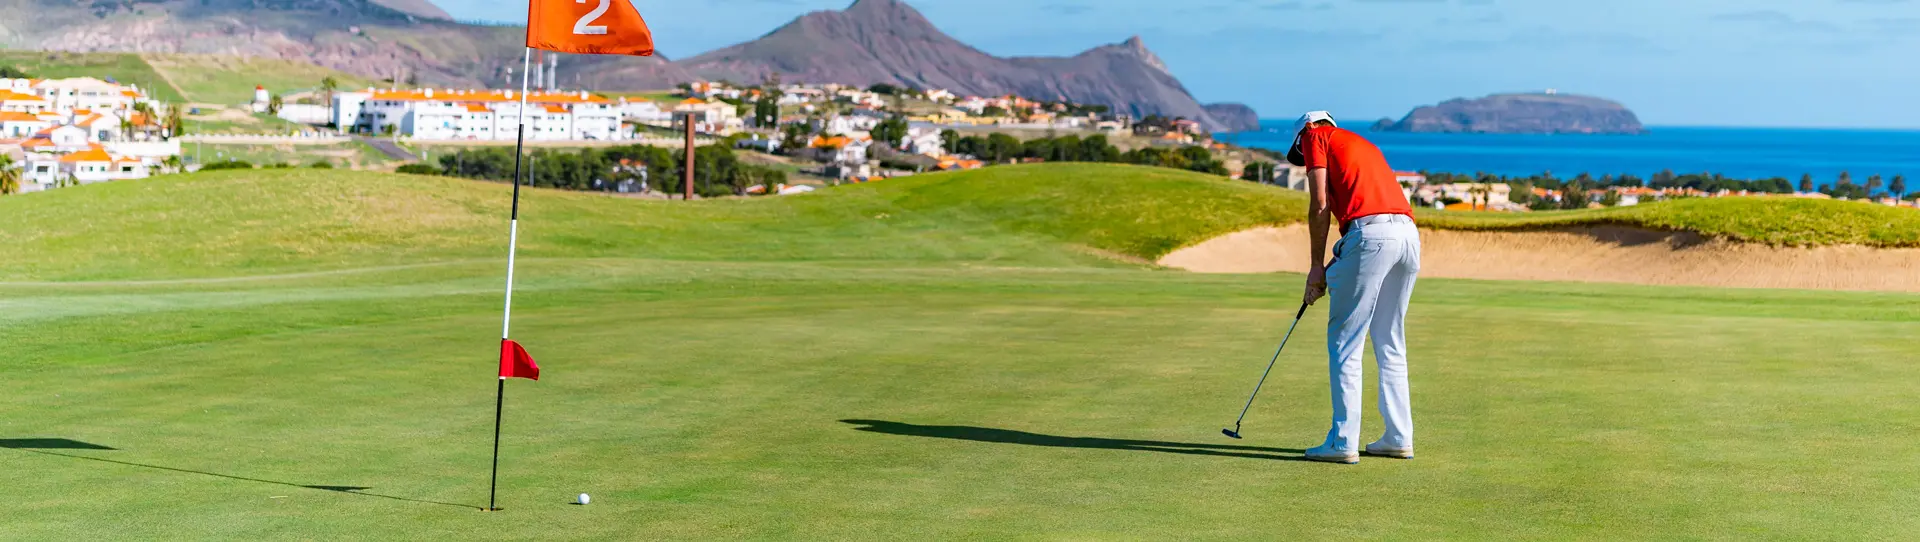 Portugal golf holidays - Madeira Golf Premium Passport 6 Rounds - Photo 1